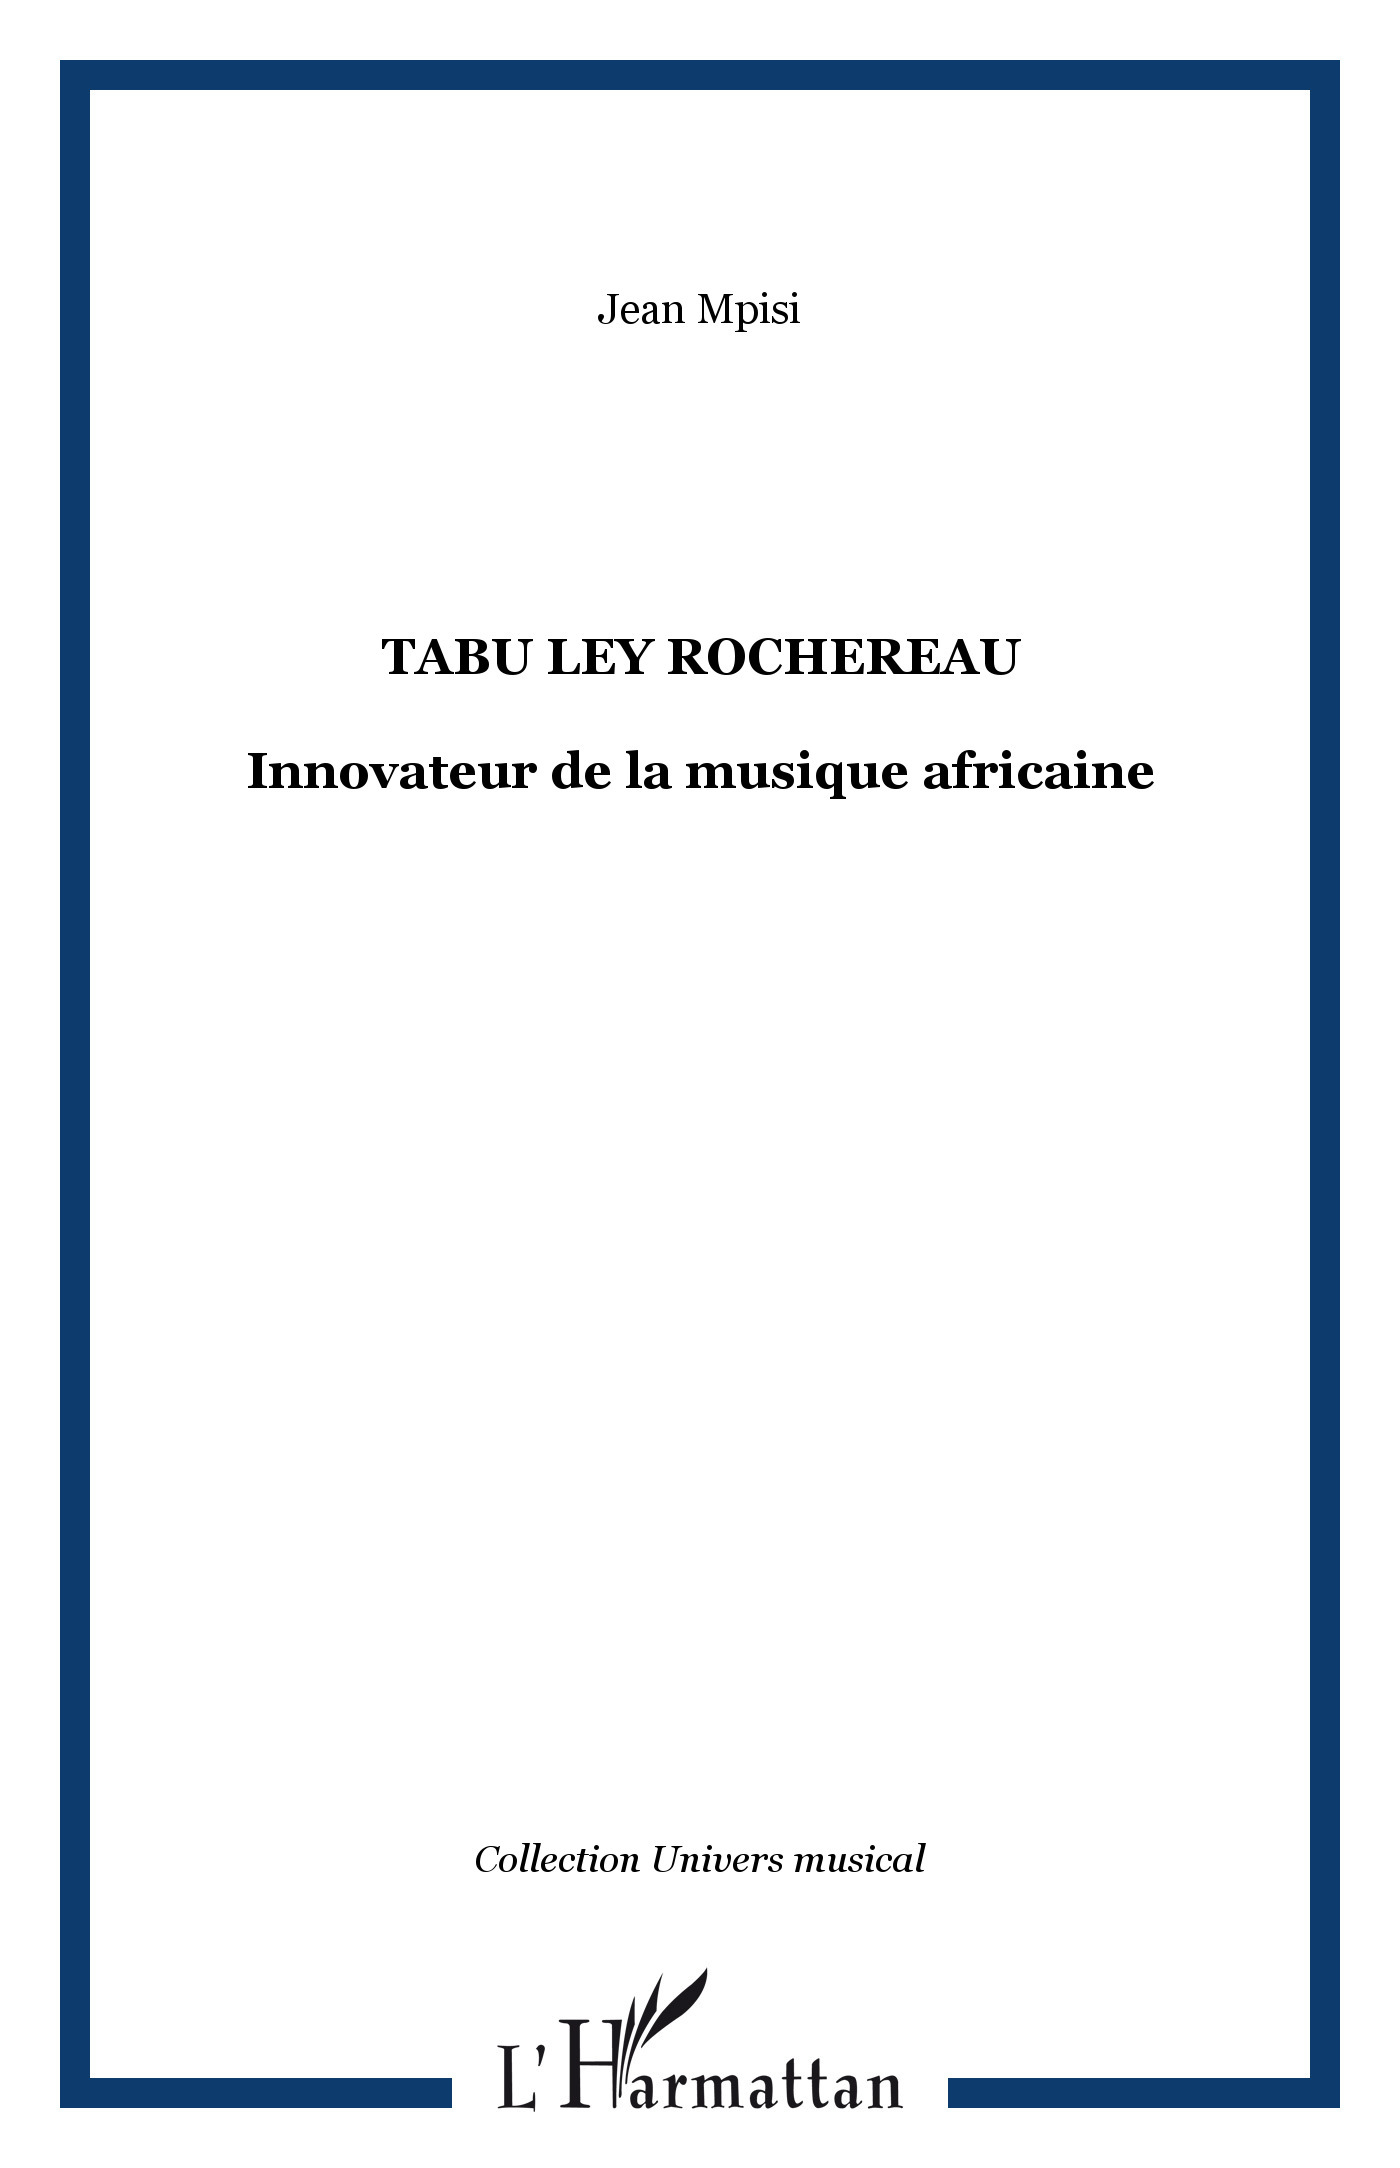 Tabu Ley Rochereau (9782747557351-front-cover)